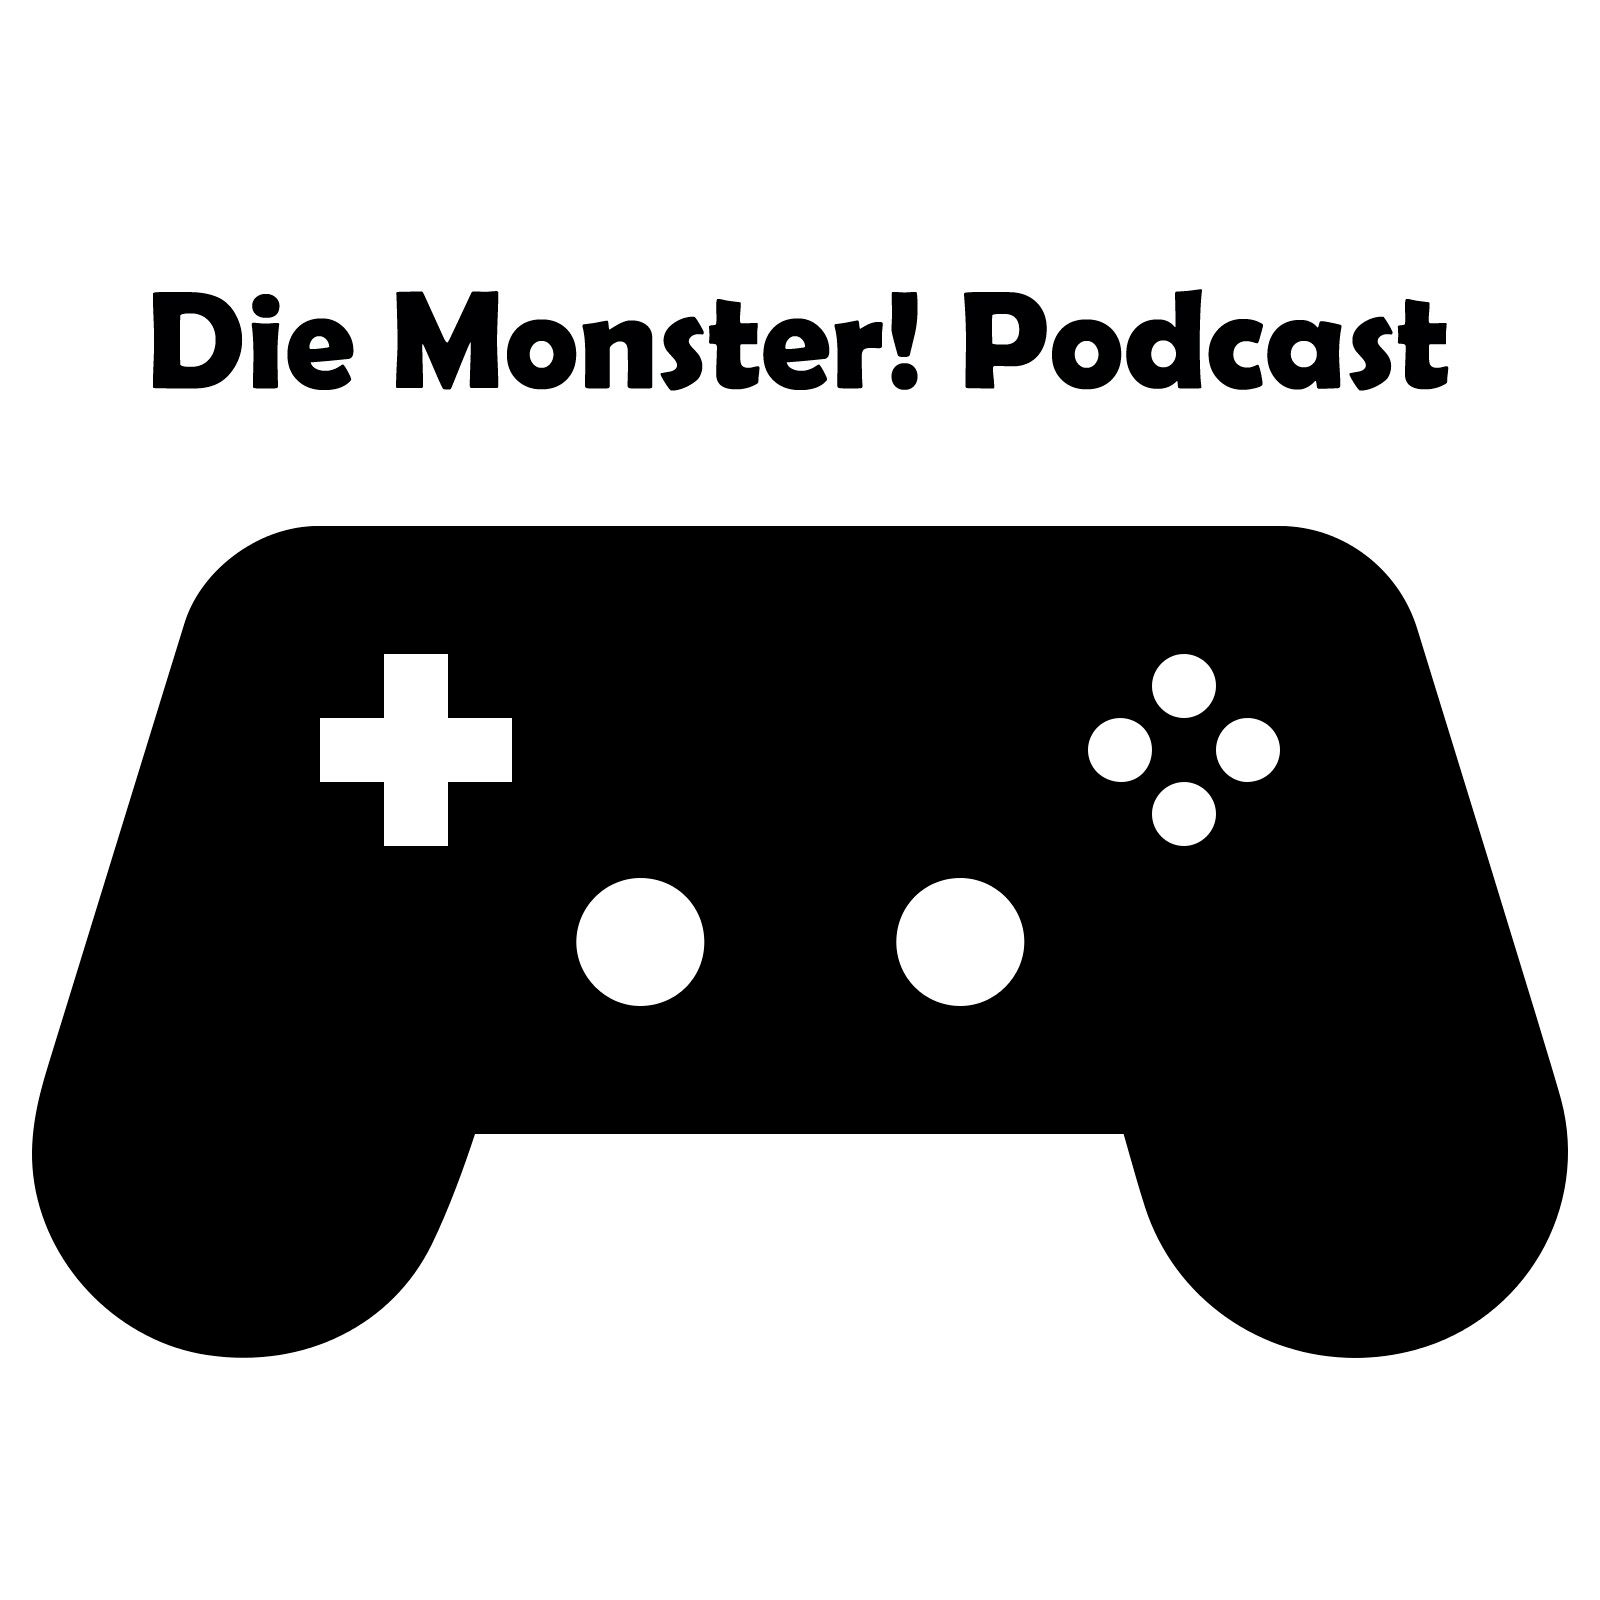 Die Monster! Podcast